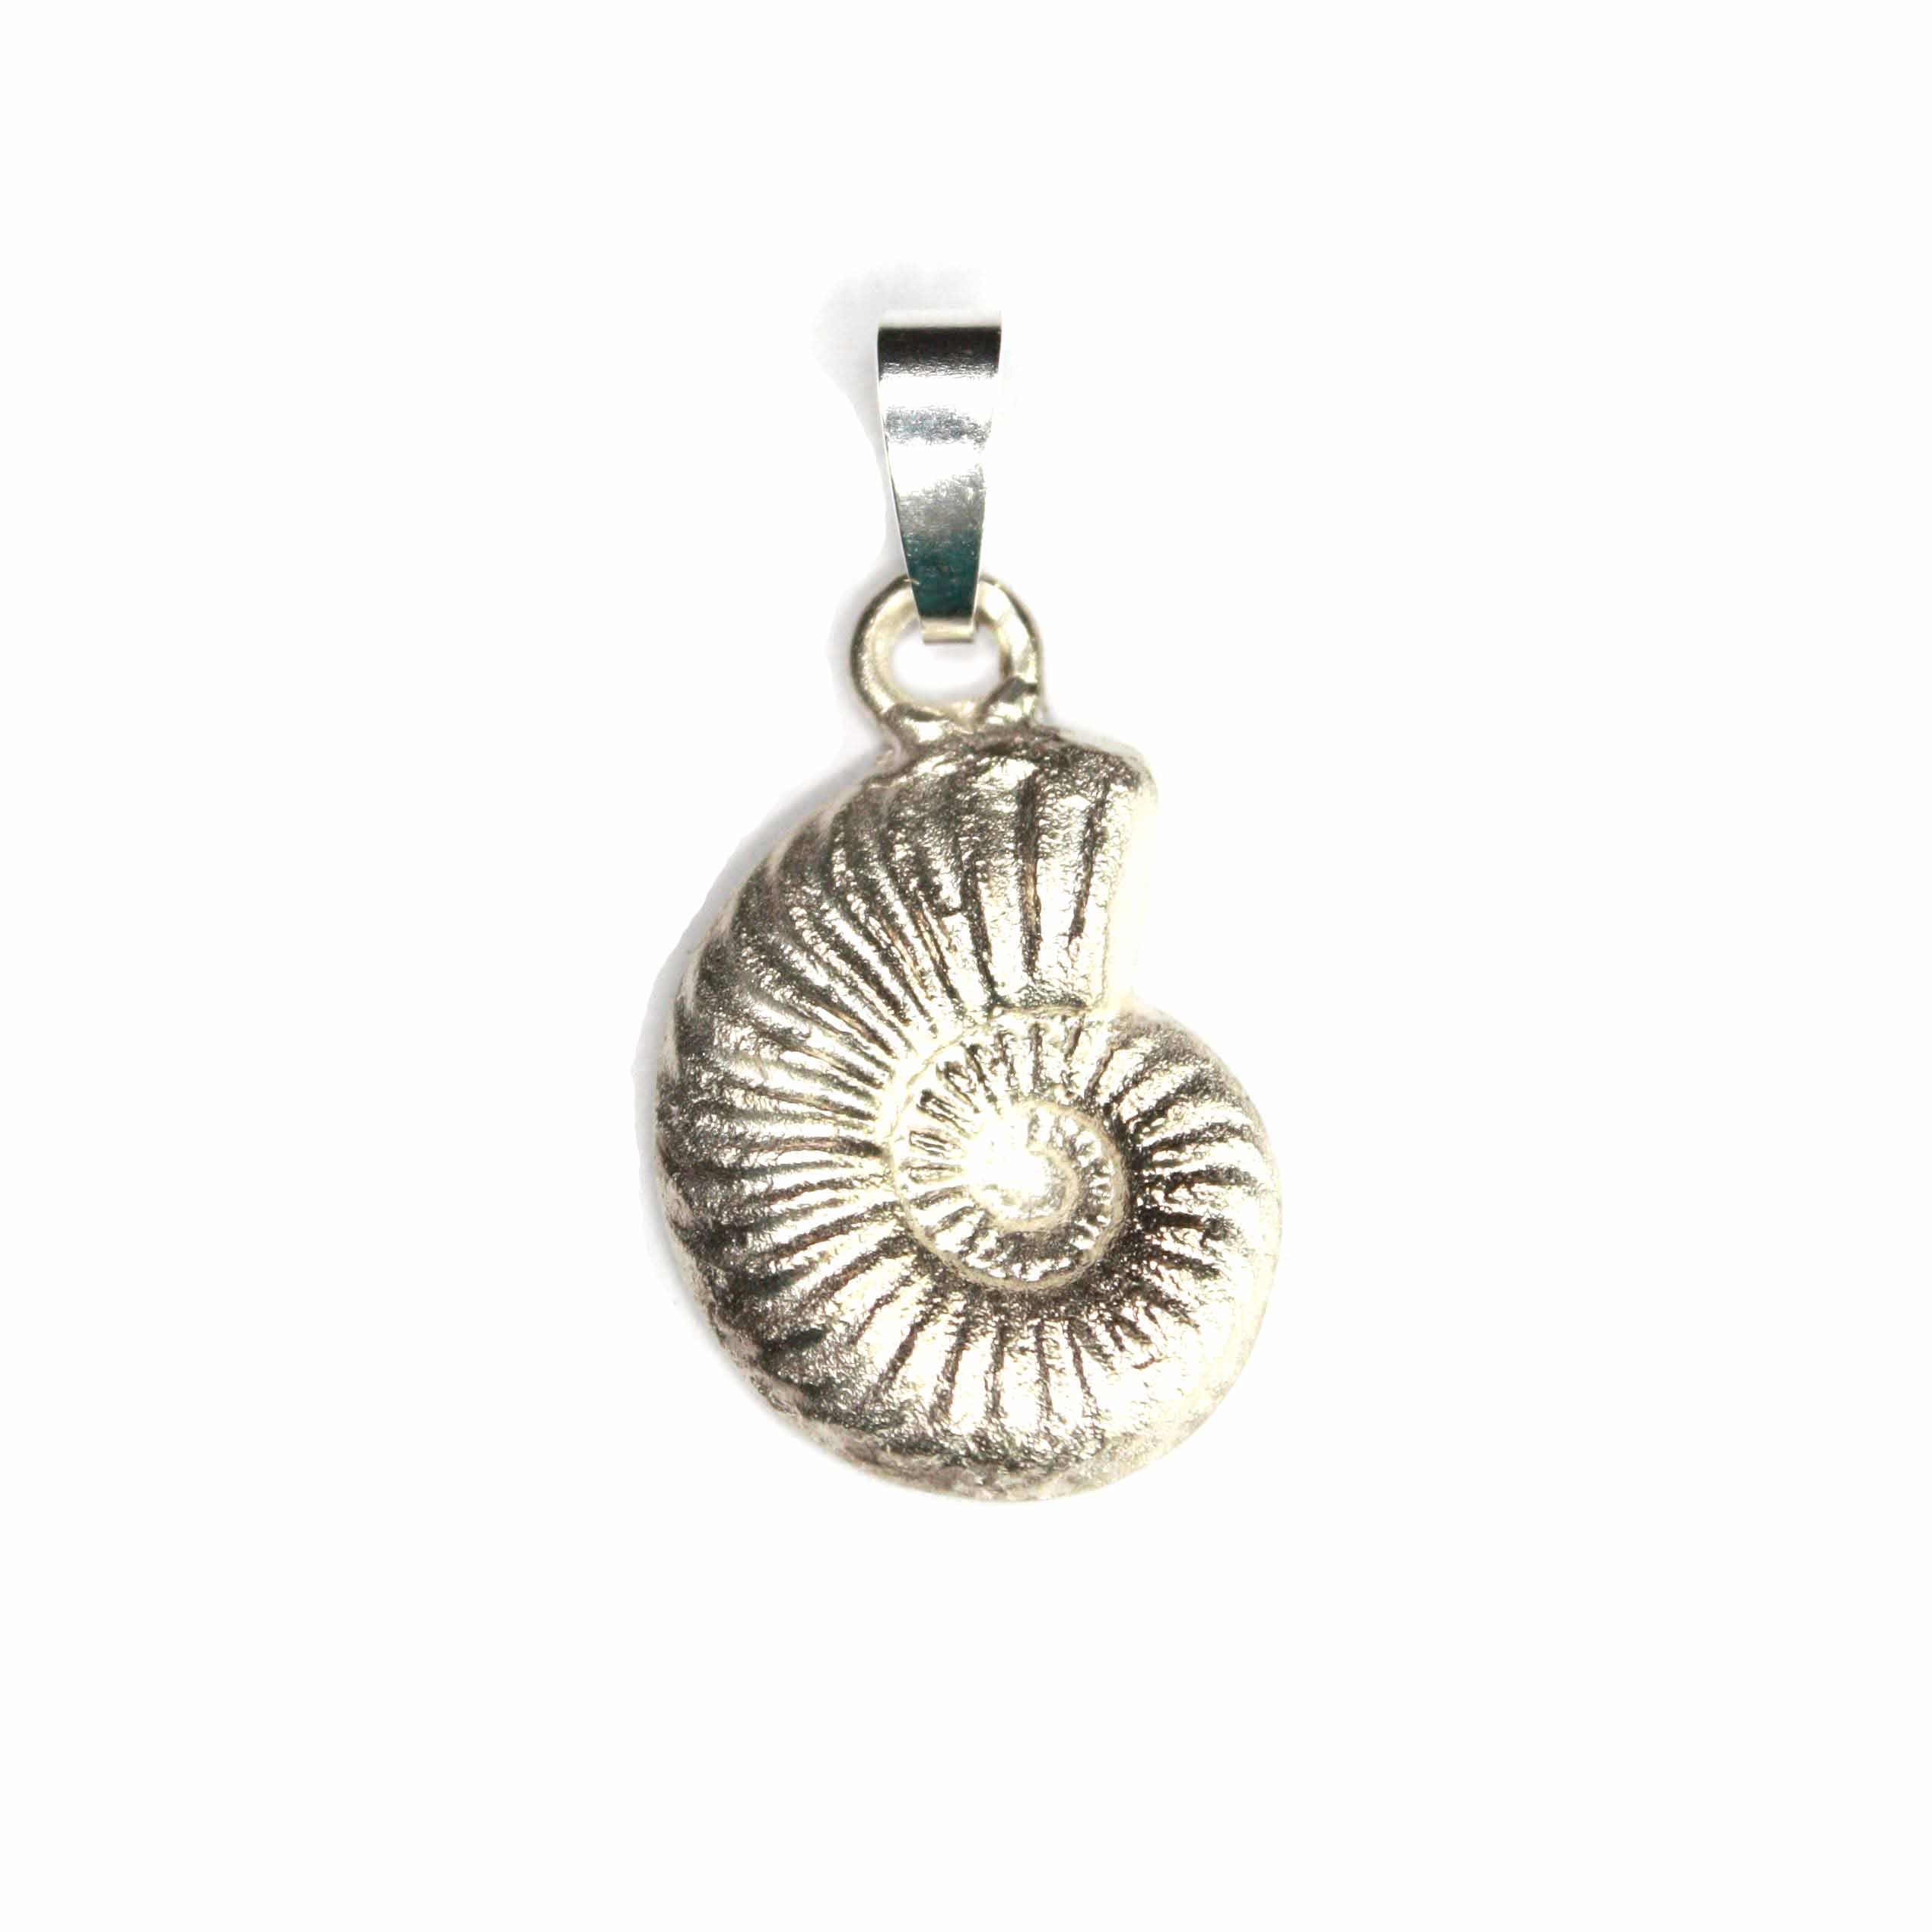 Maritmer-Meeres-Schmuck-Kettenanhannger-Ammonit-Silber-925-handarbeit